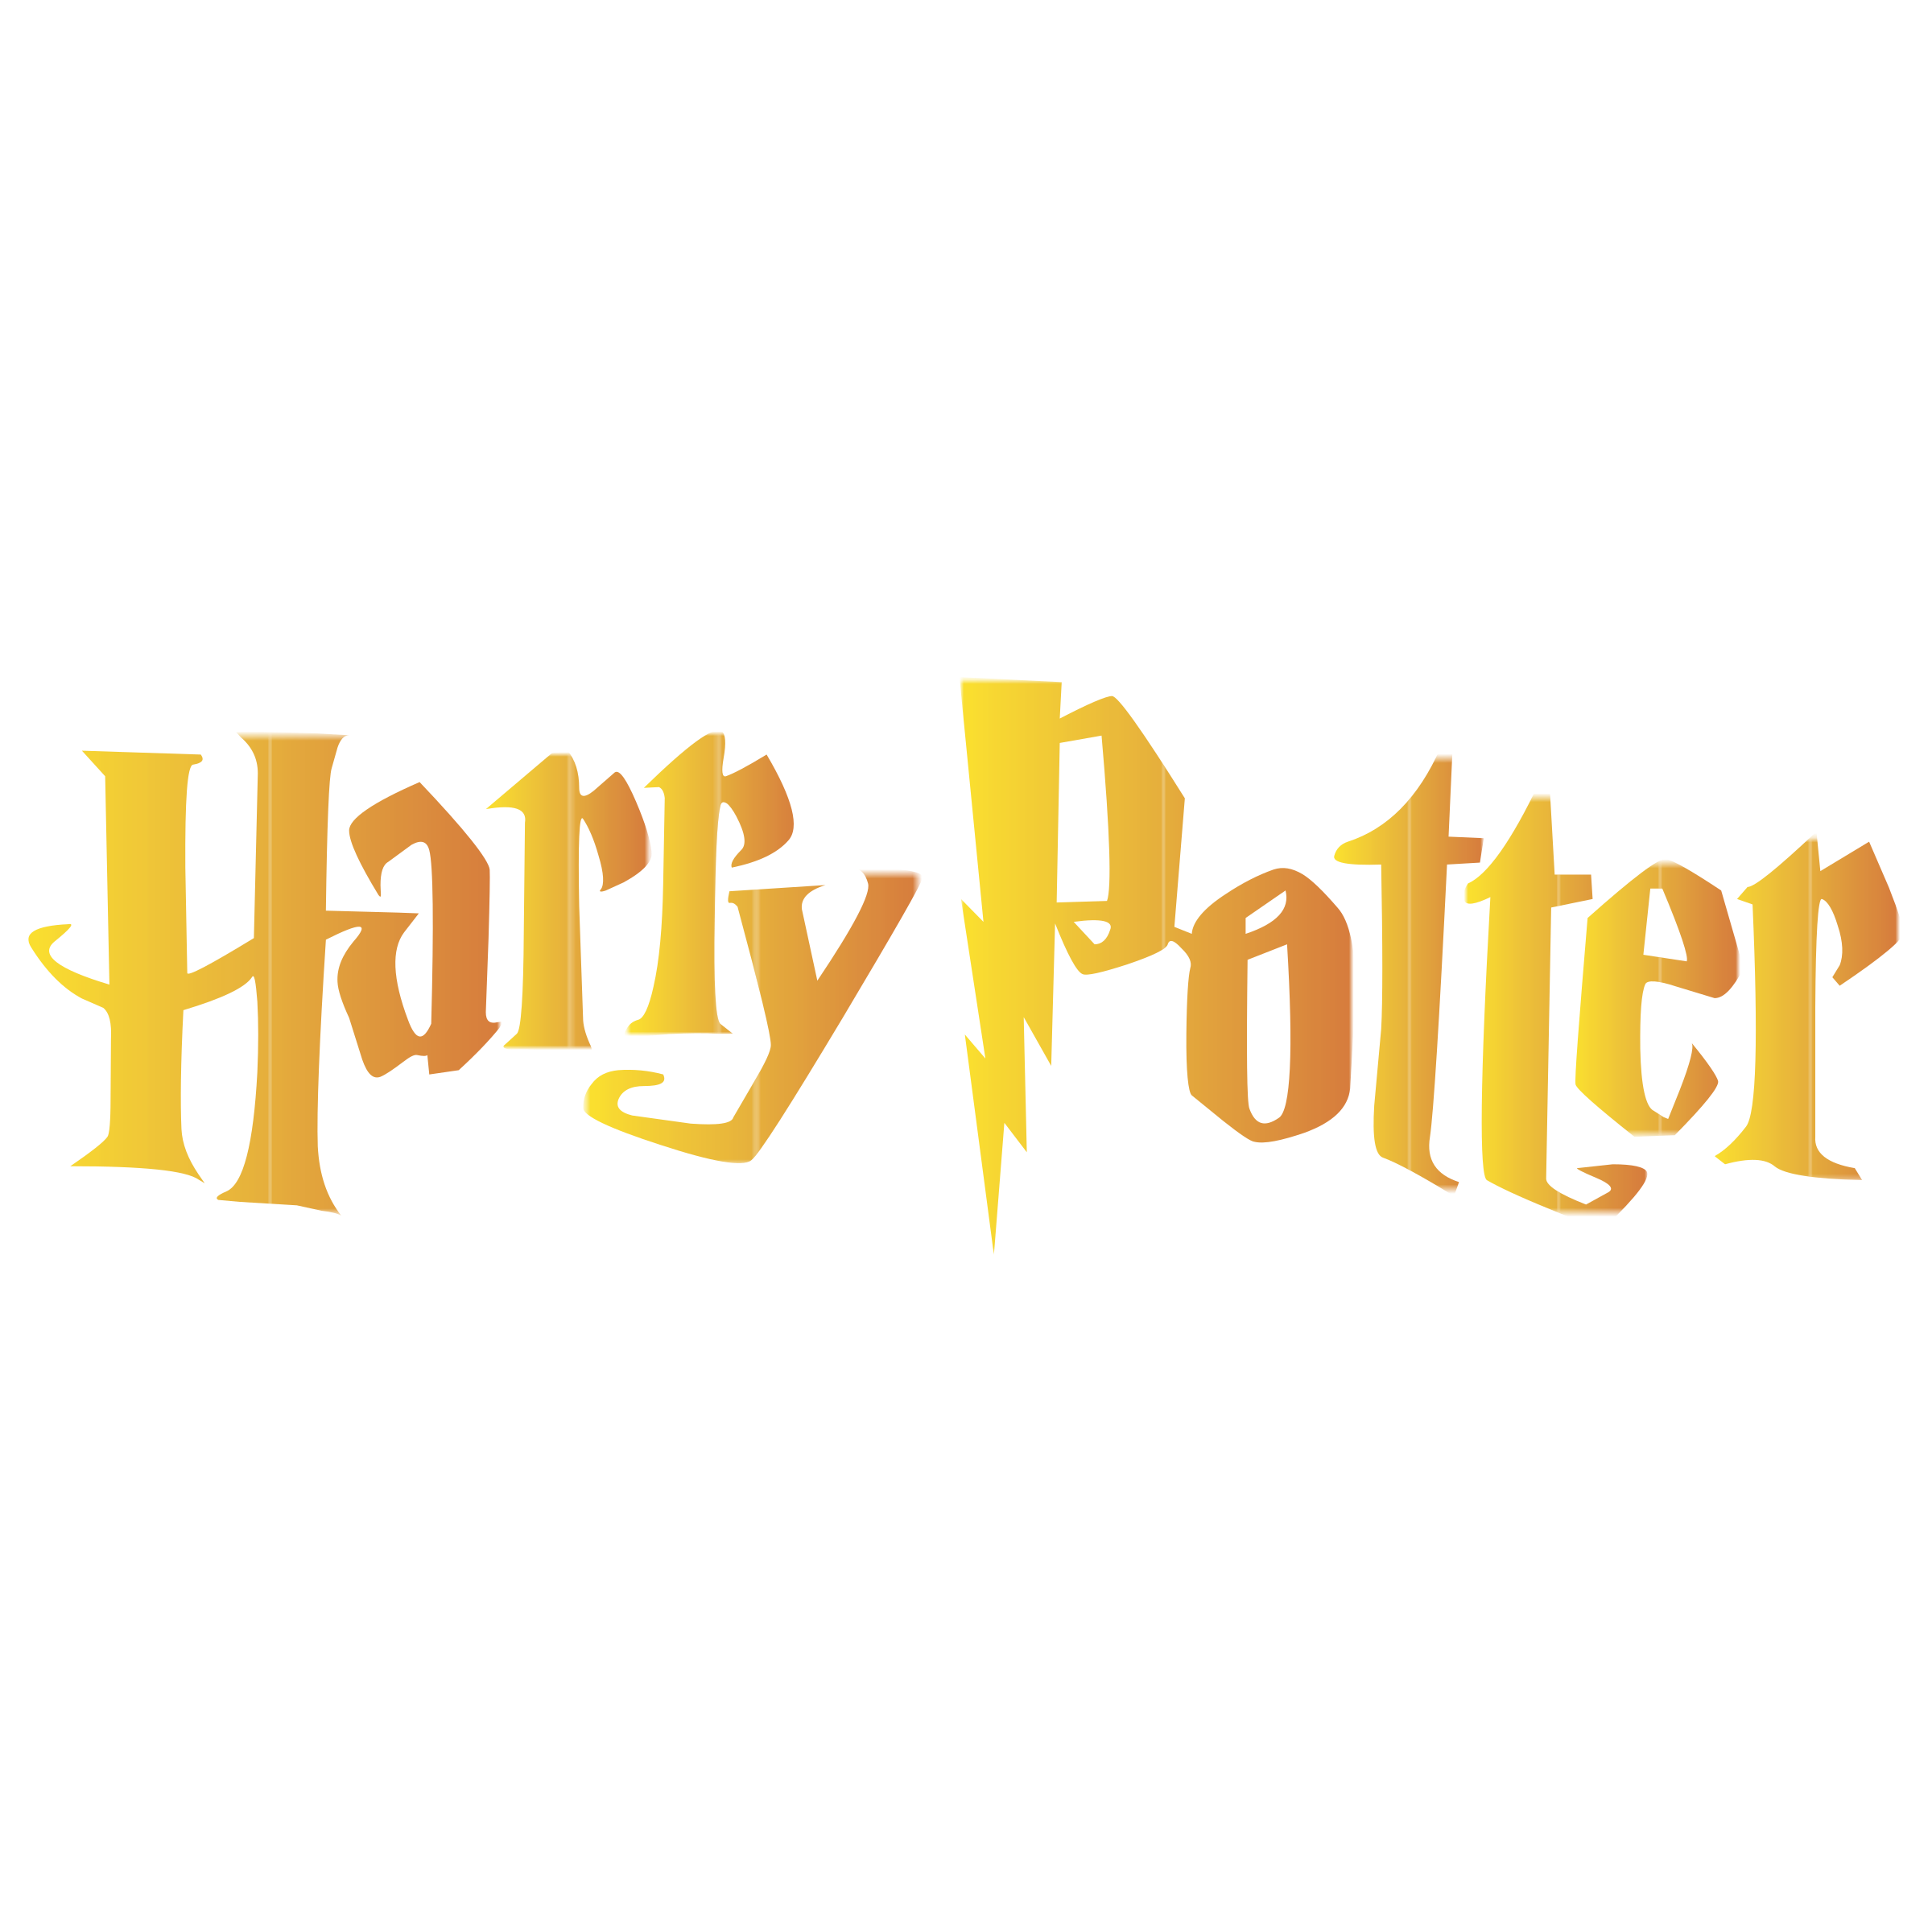 Vektor Harry Potter PNG Herunterladen Bild Herunterladen